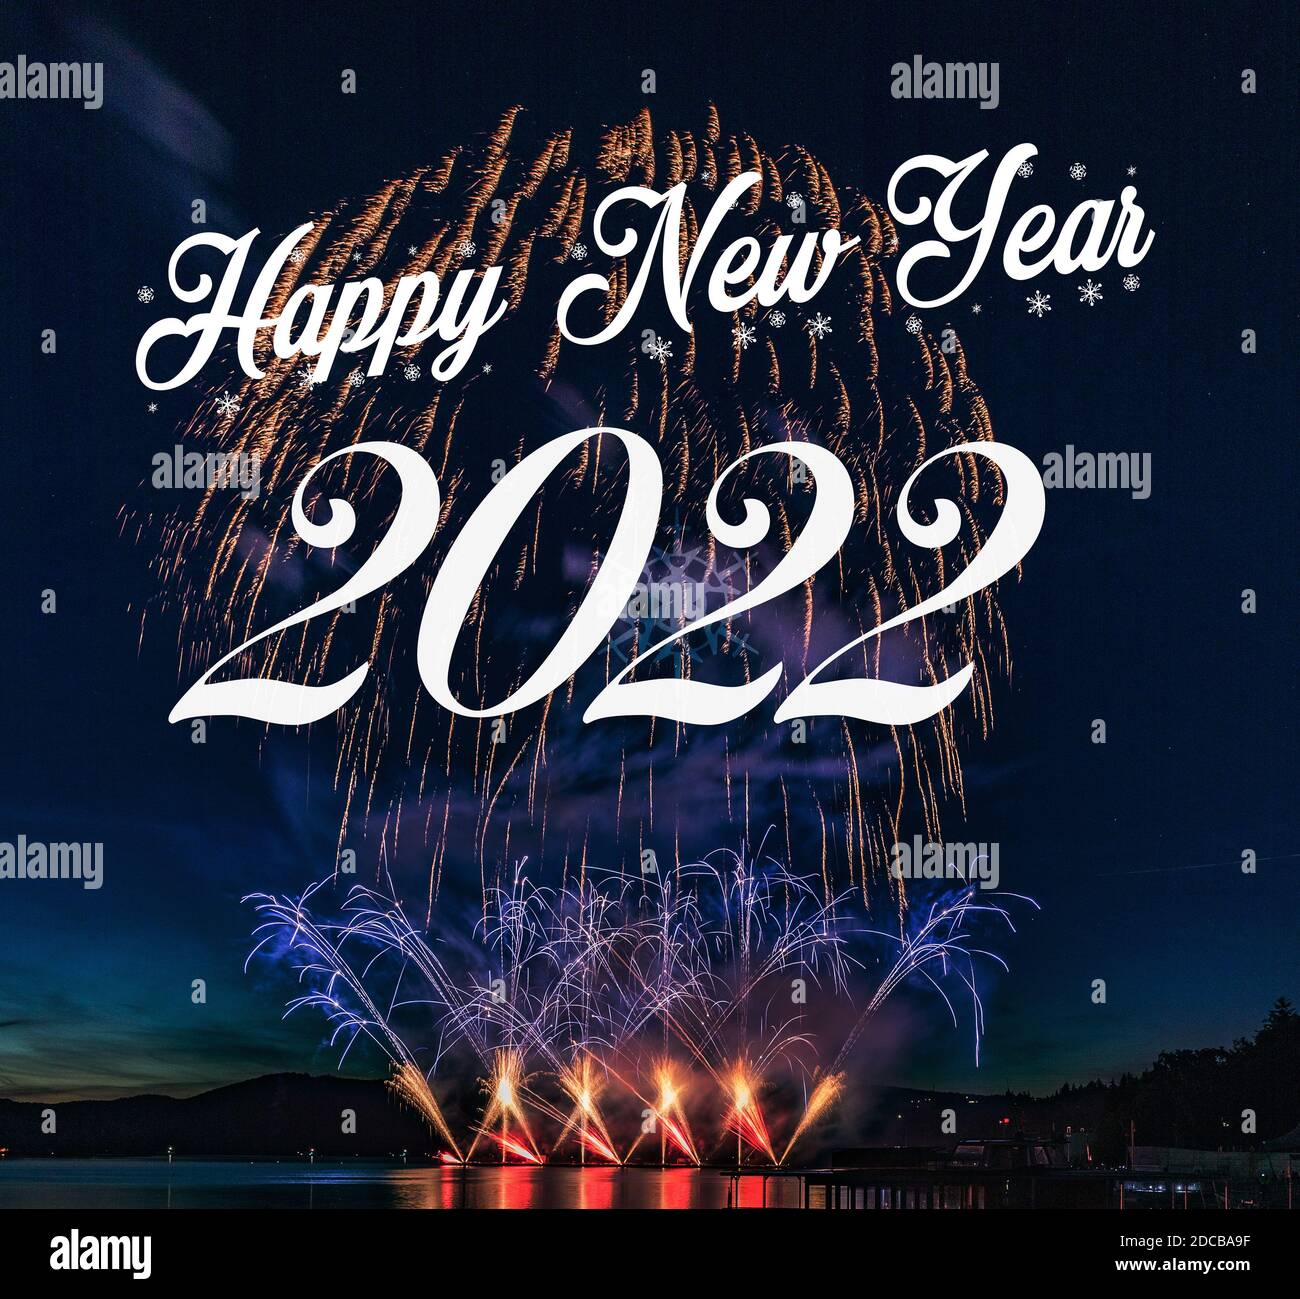 Happy new year 2022 with fireworks background. Celebration New Year 2022  Stock Photo - Alamy